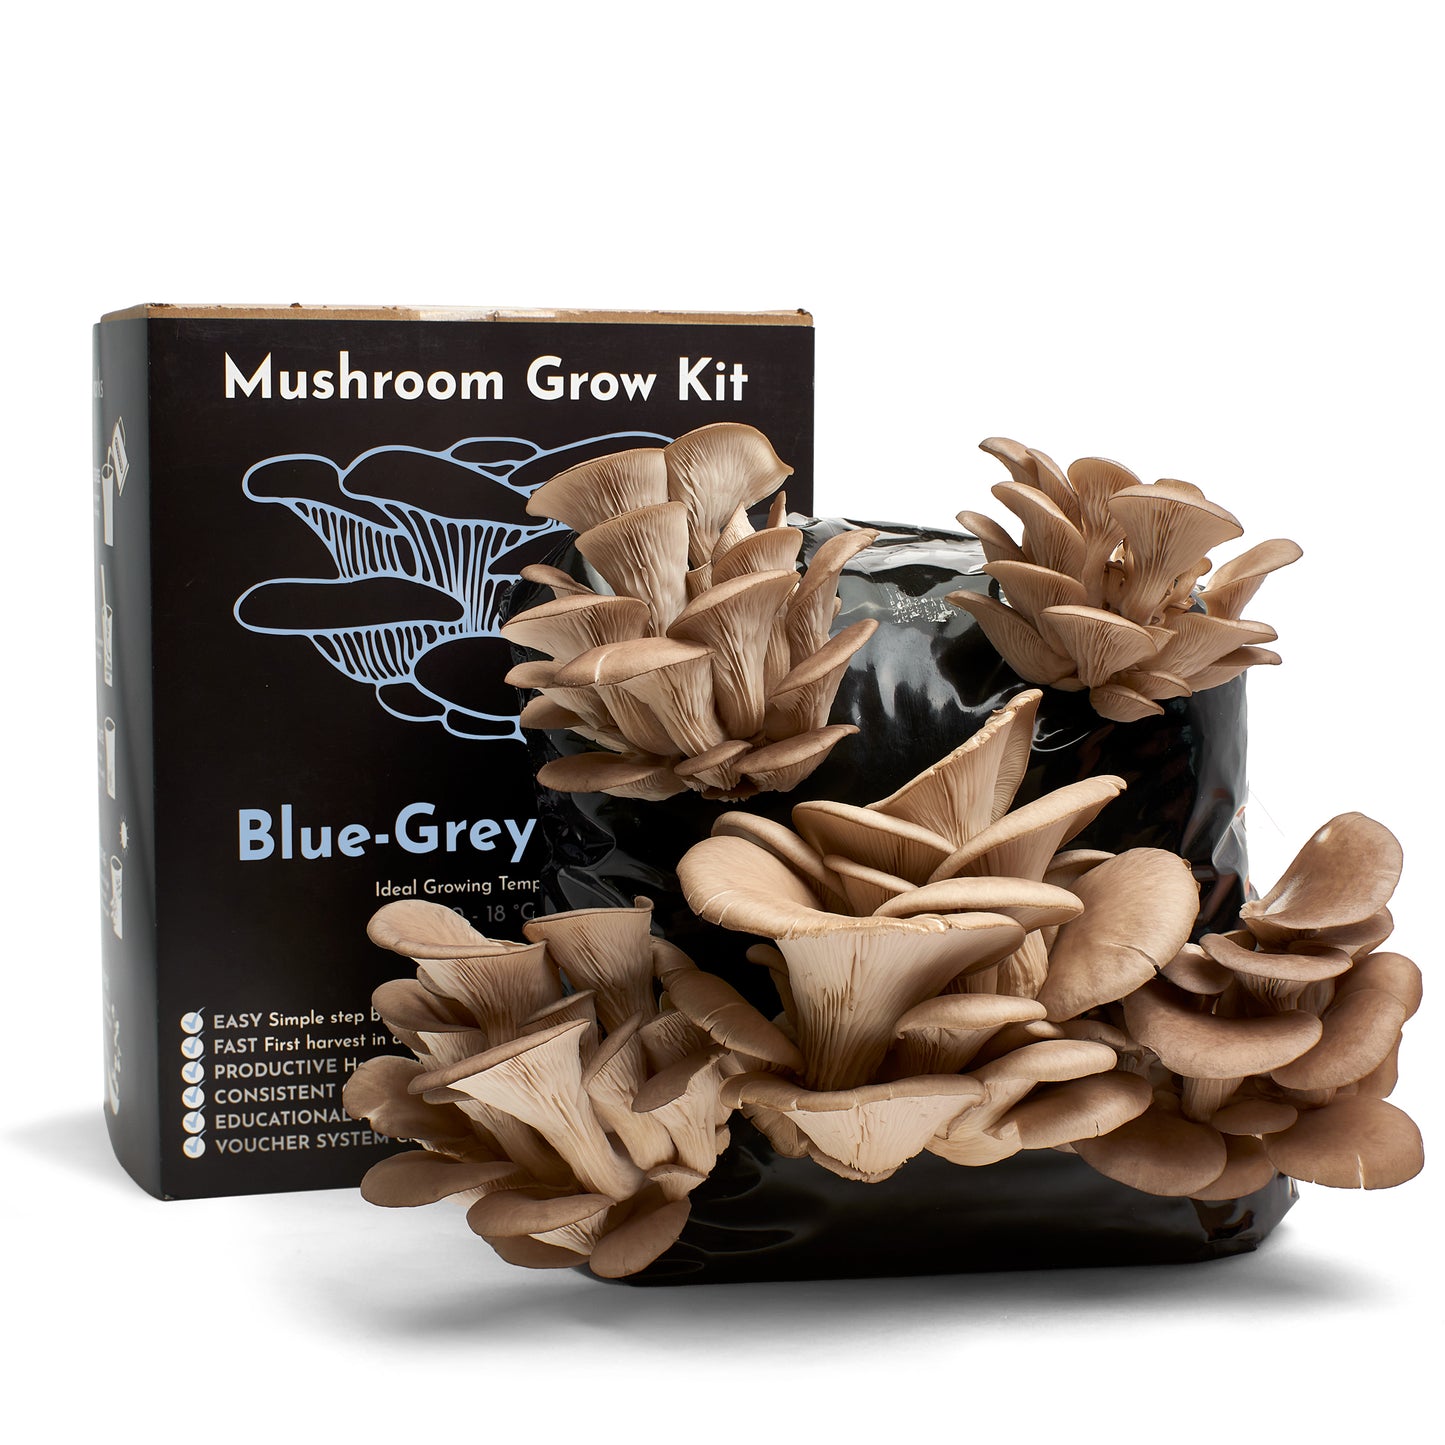 Mushroom Growing Kit - Blue Grey Oyster - Gift Option